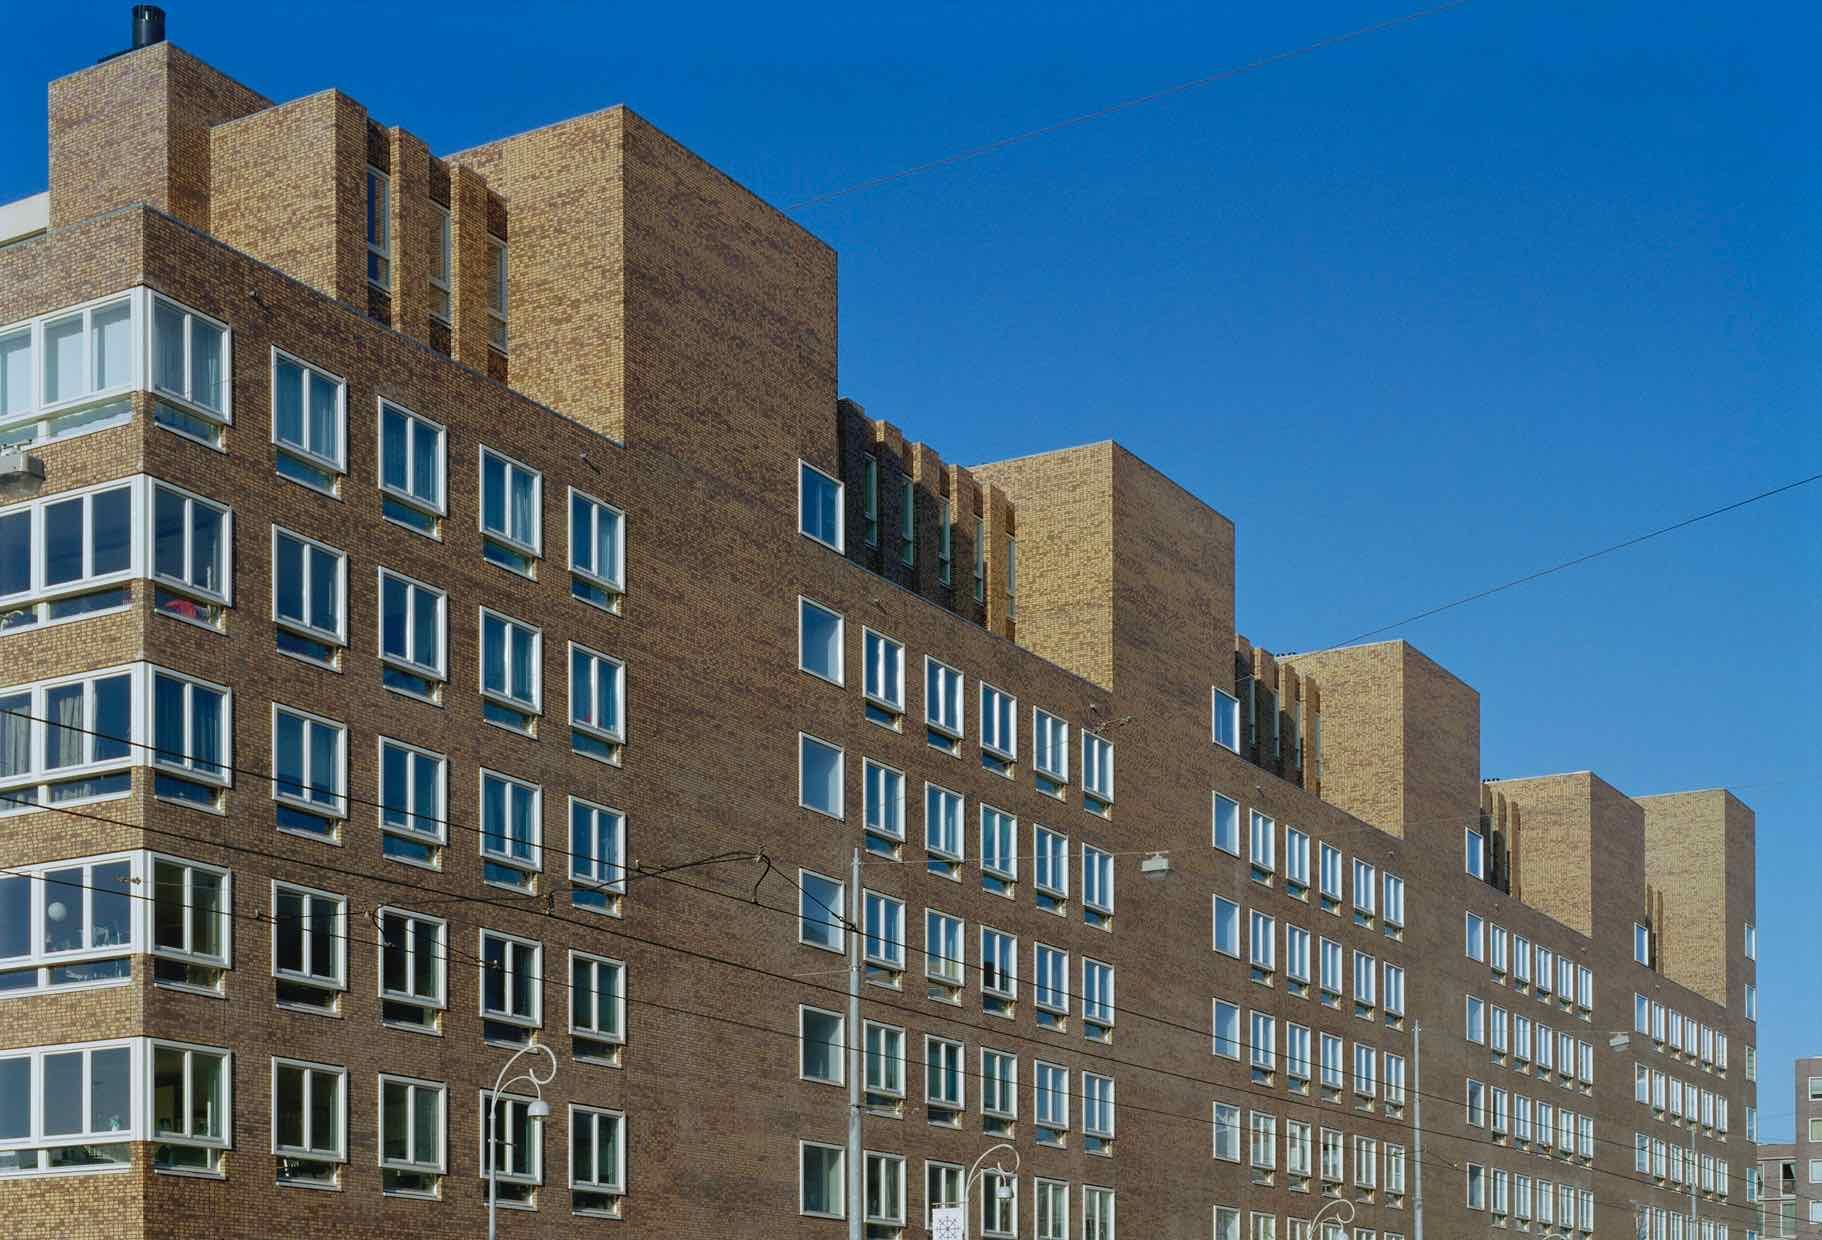 Appartementen Bos en Lommer, Amsterdam - Geurst & Schulze Architecten 3